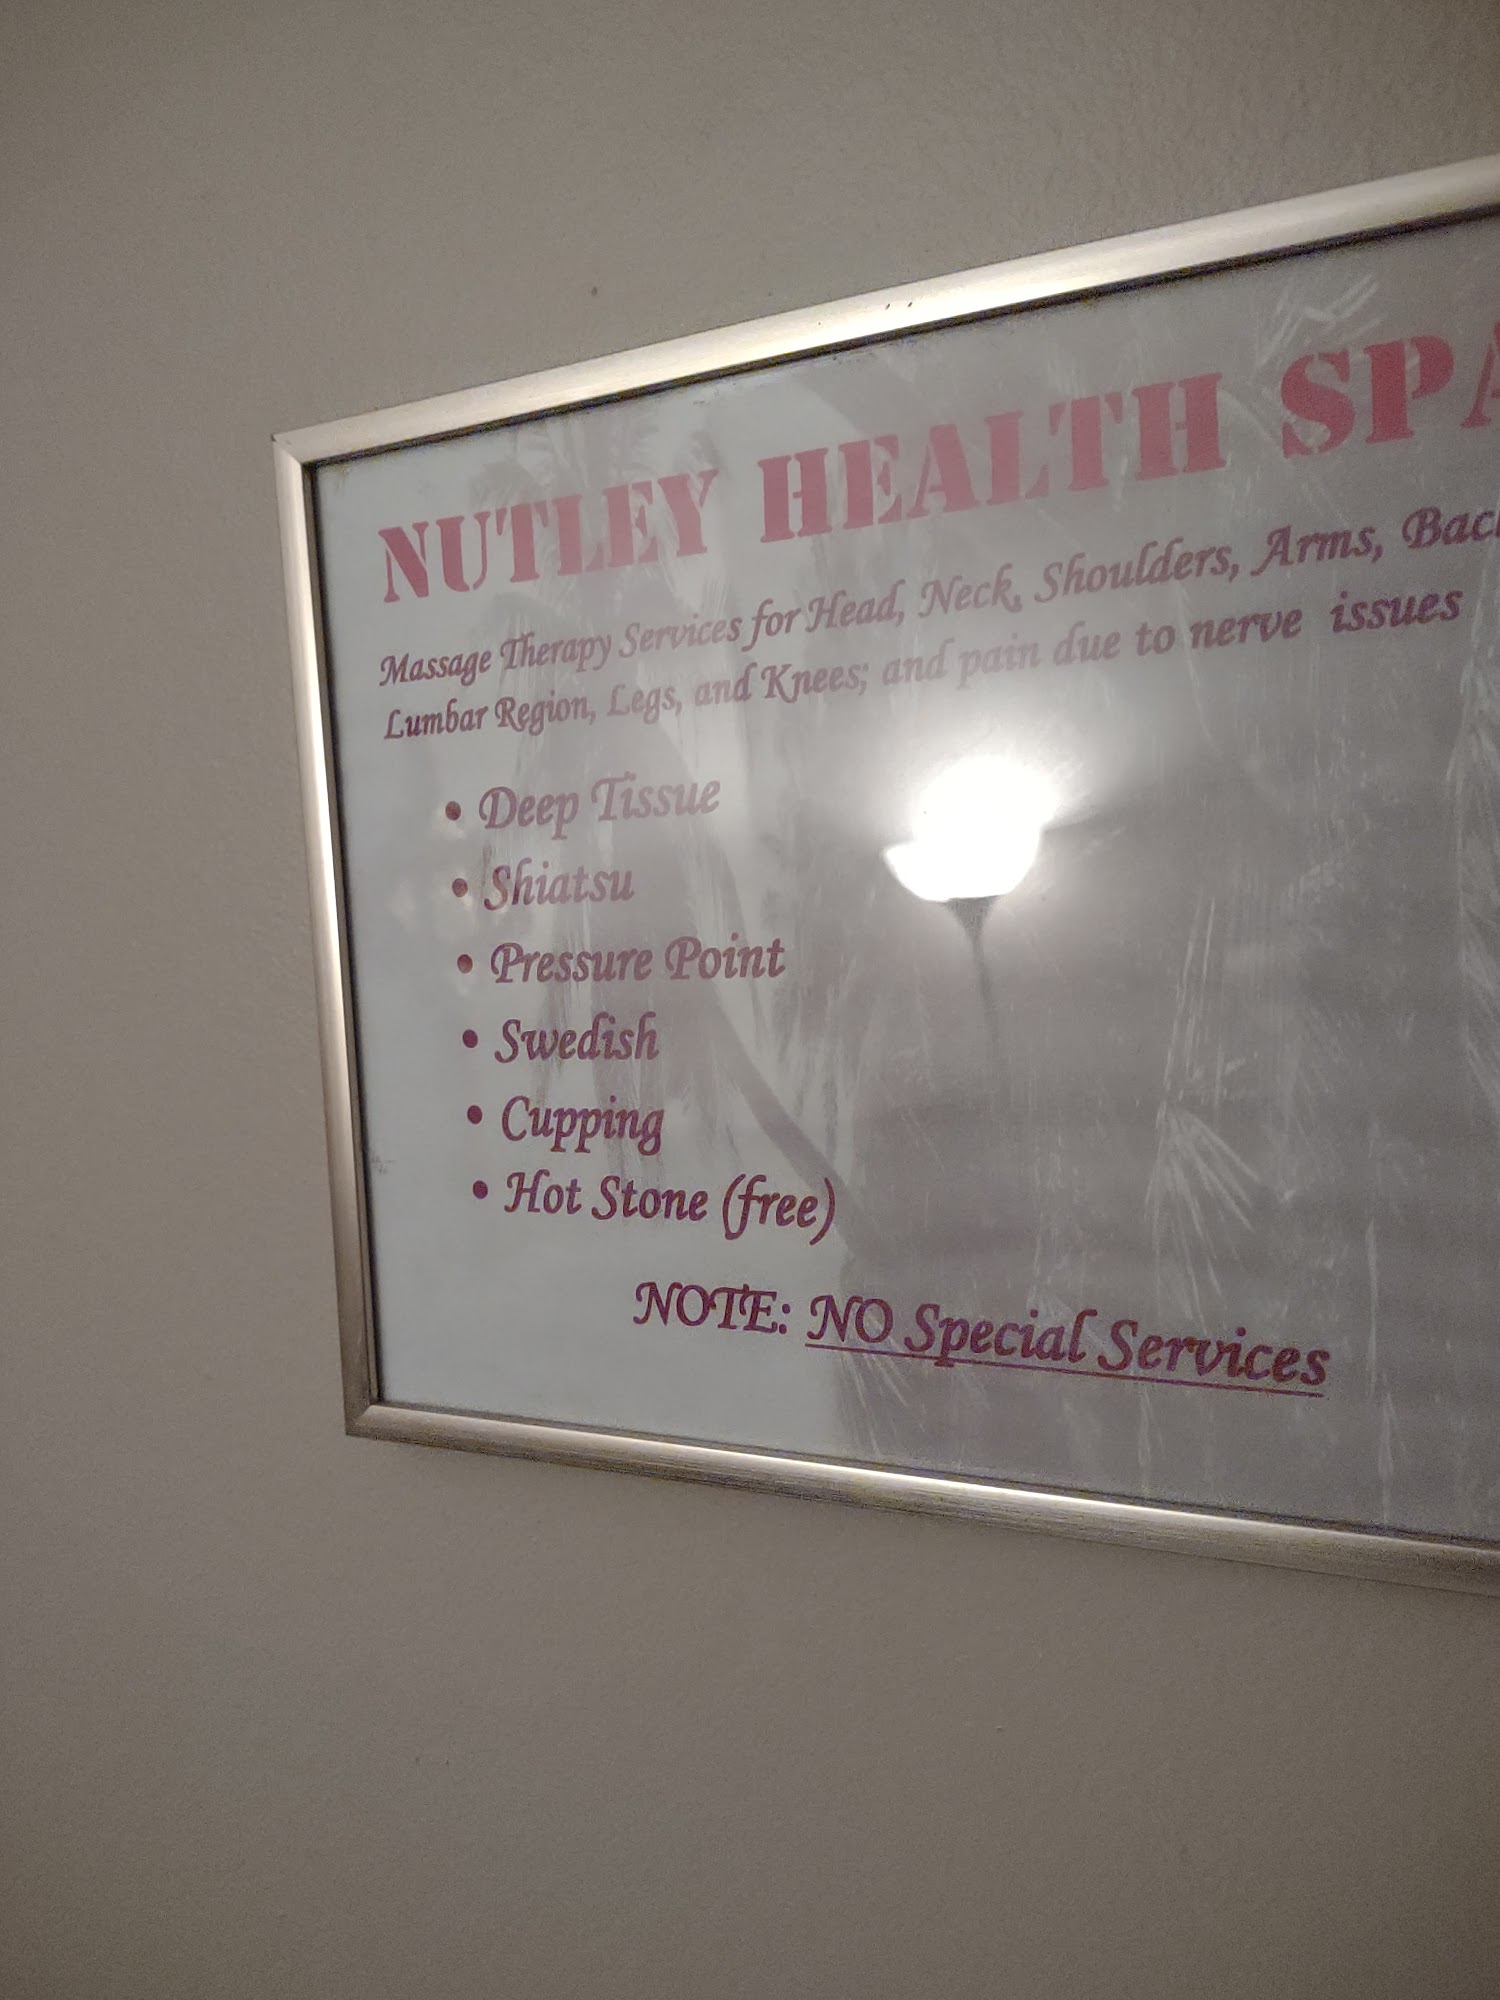 Lily's Nutley Health Spa